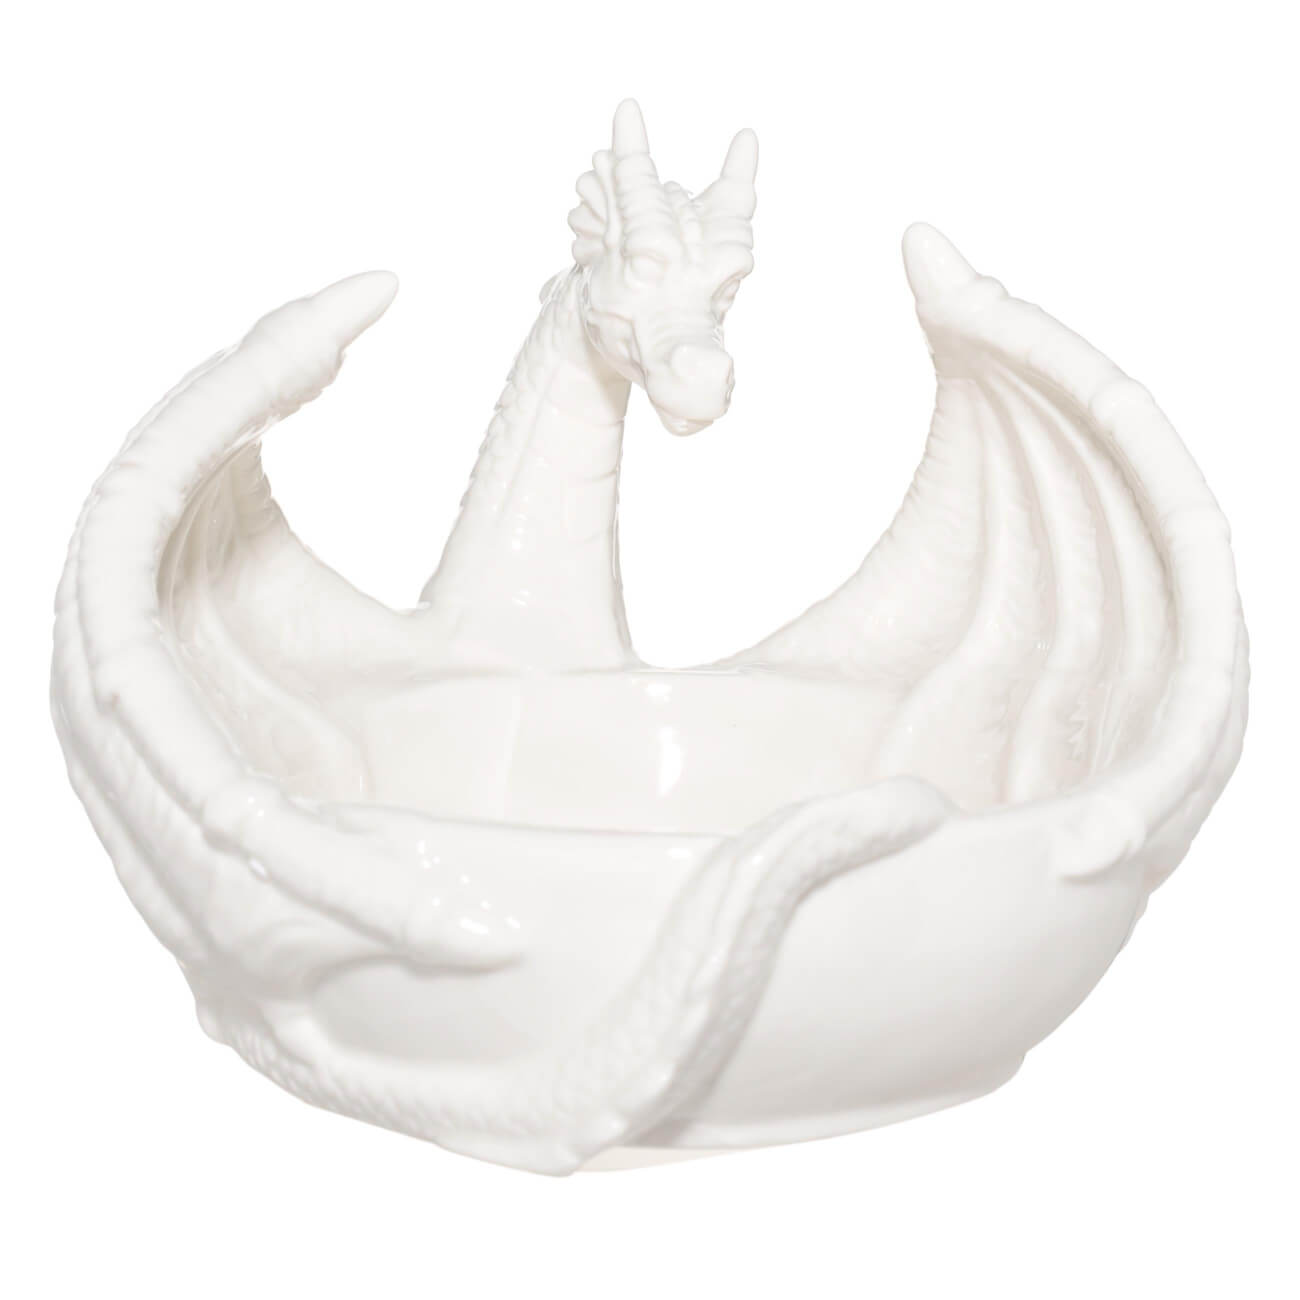 Конфетница, 22х18 см, керамика, белая, Дракон-чаша, Dragon rainira